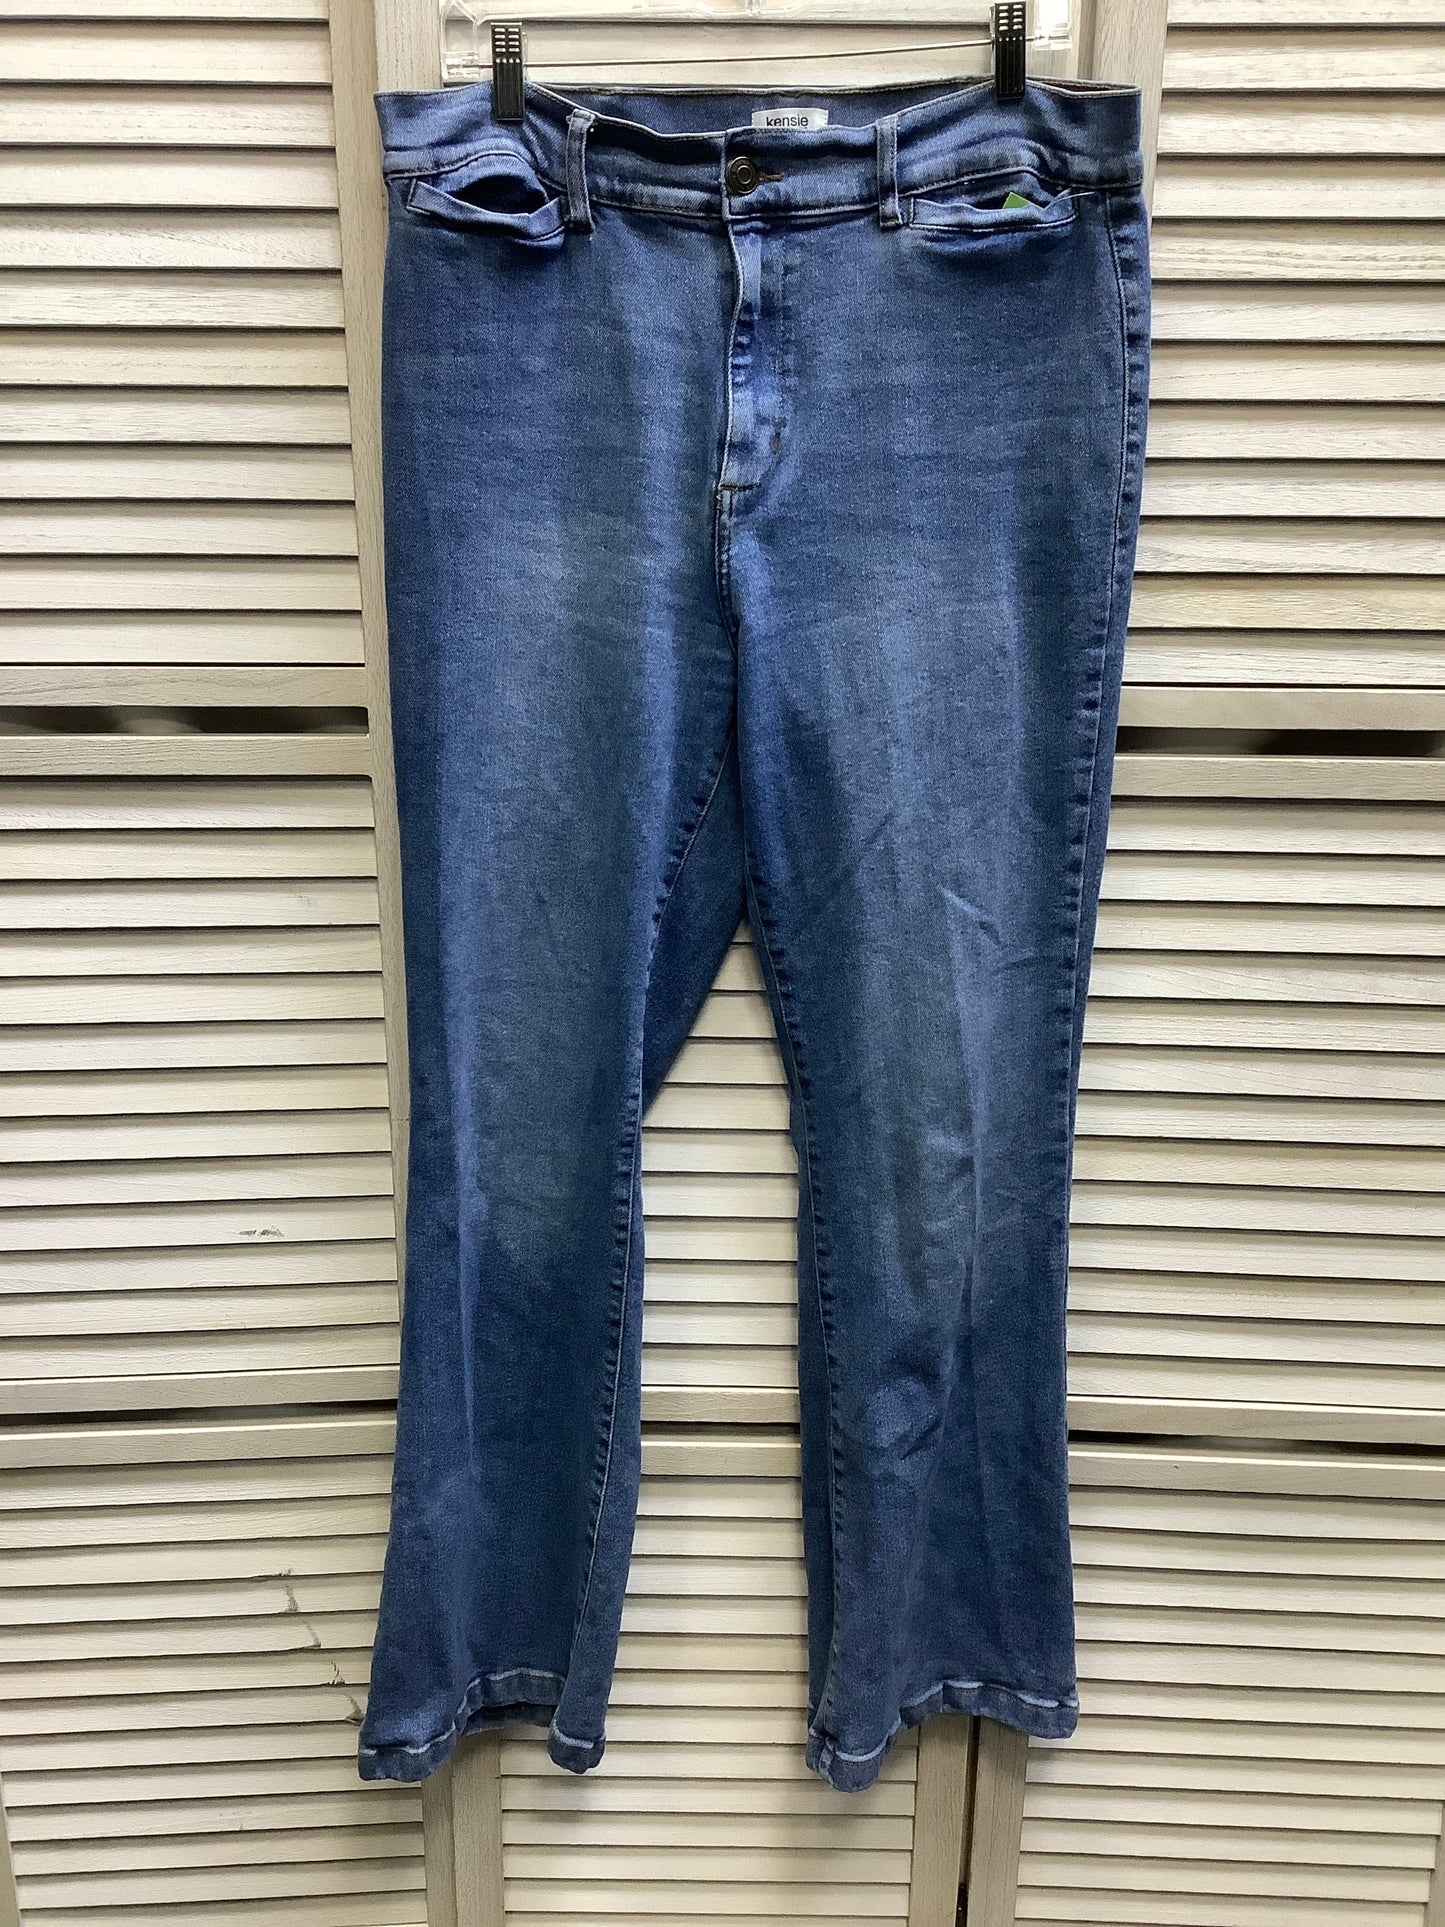 Blue Denim Jeans Boot Cut Kensie, Size 14